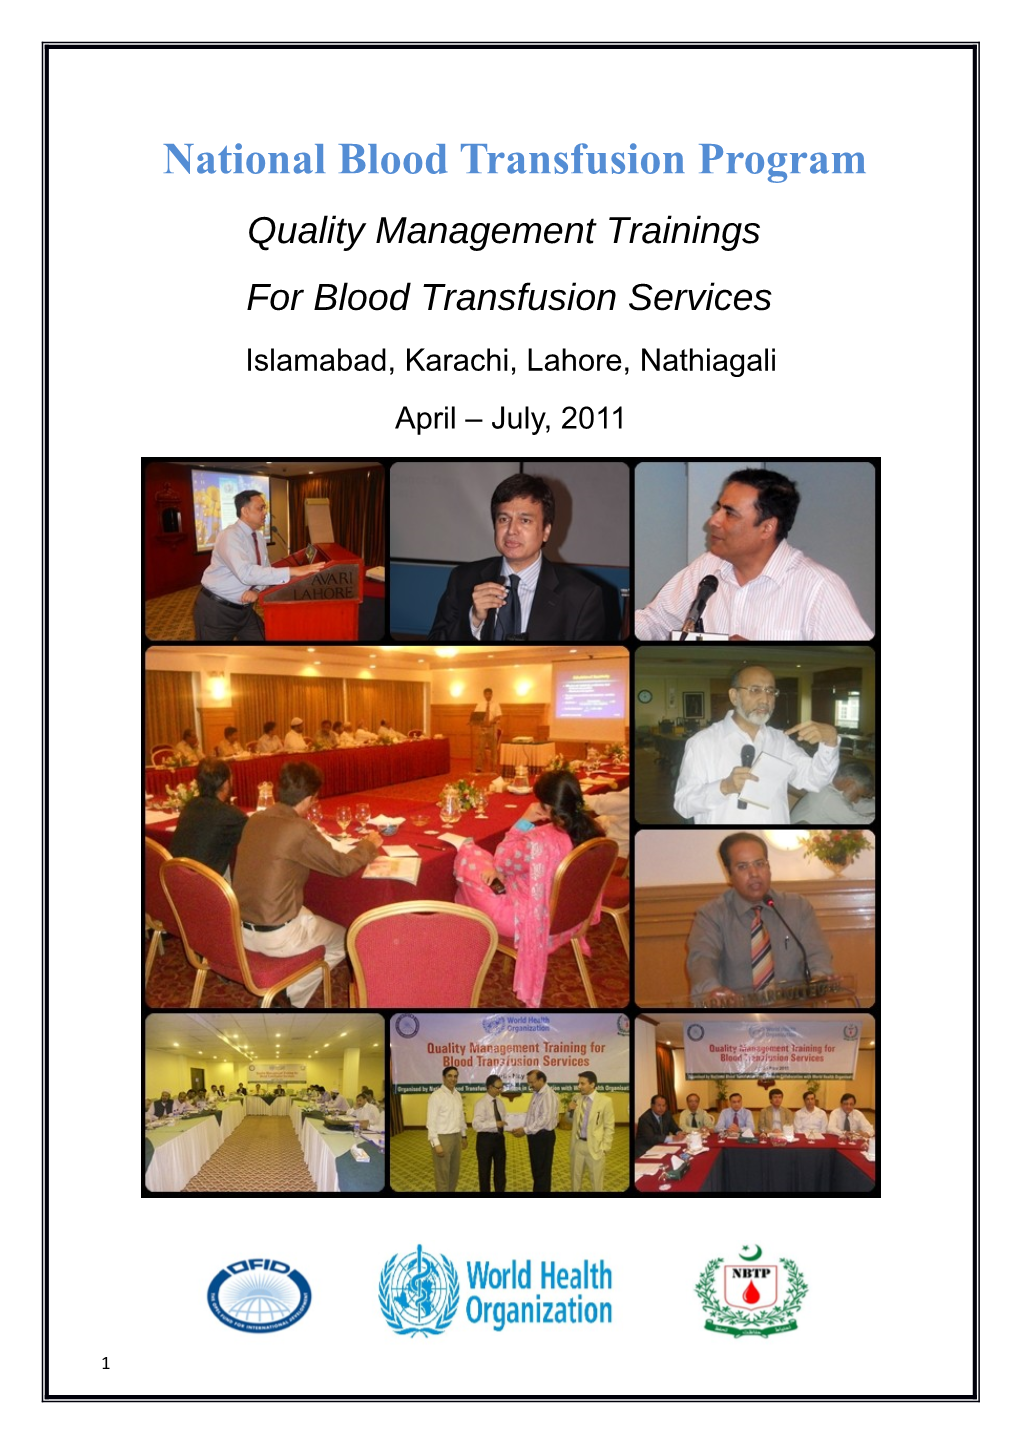 National Blood Transfusion Program Quality Management Trainings for Blood Transfusion Services Islamabad, Karachi, Lahore, Nathiagali April – July, 2011